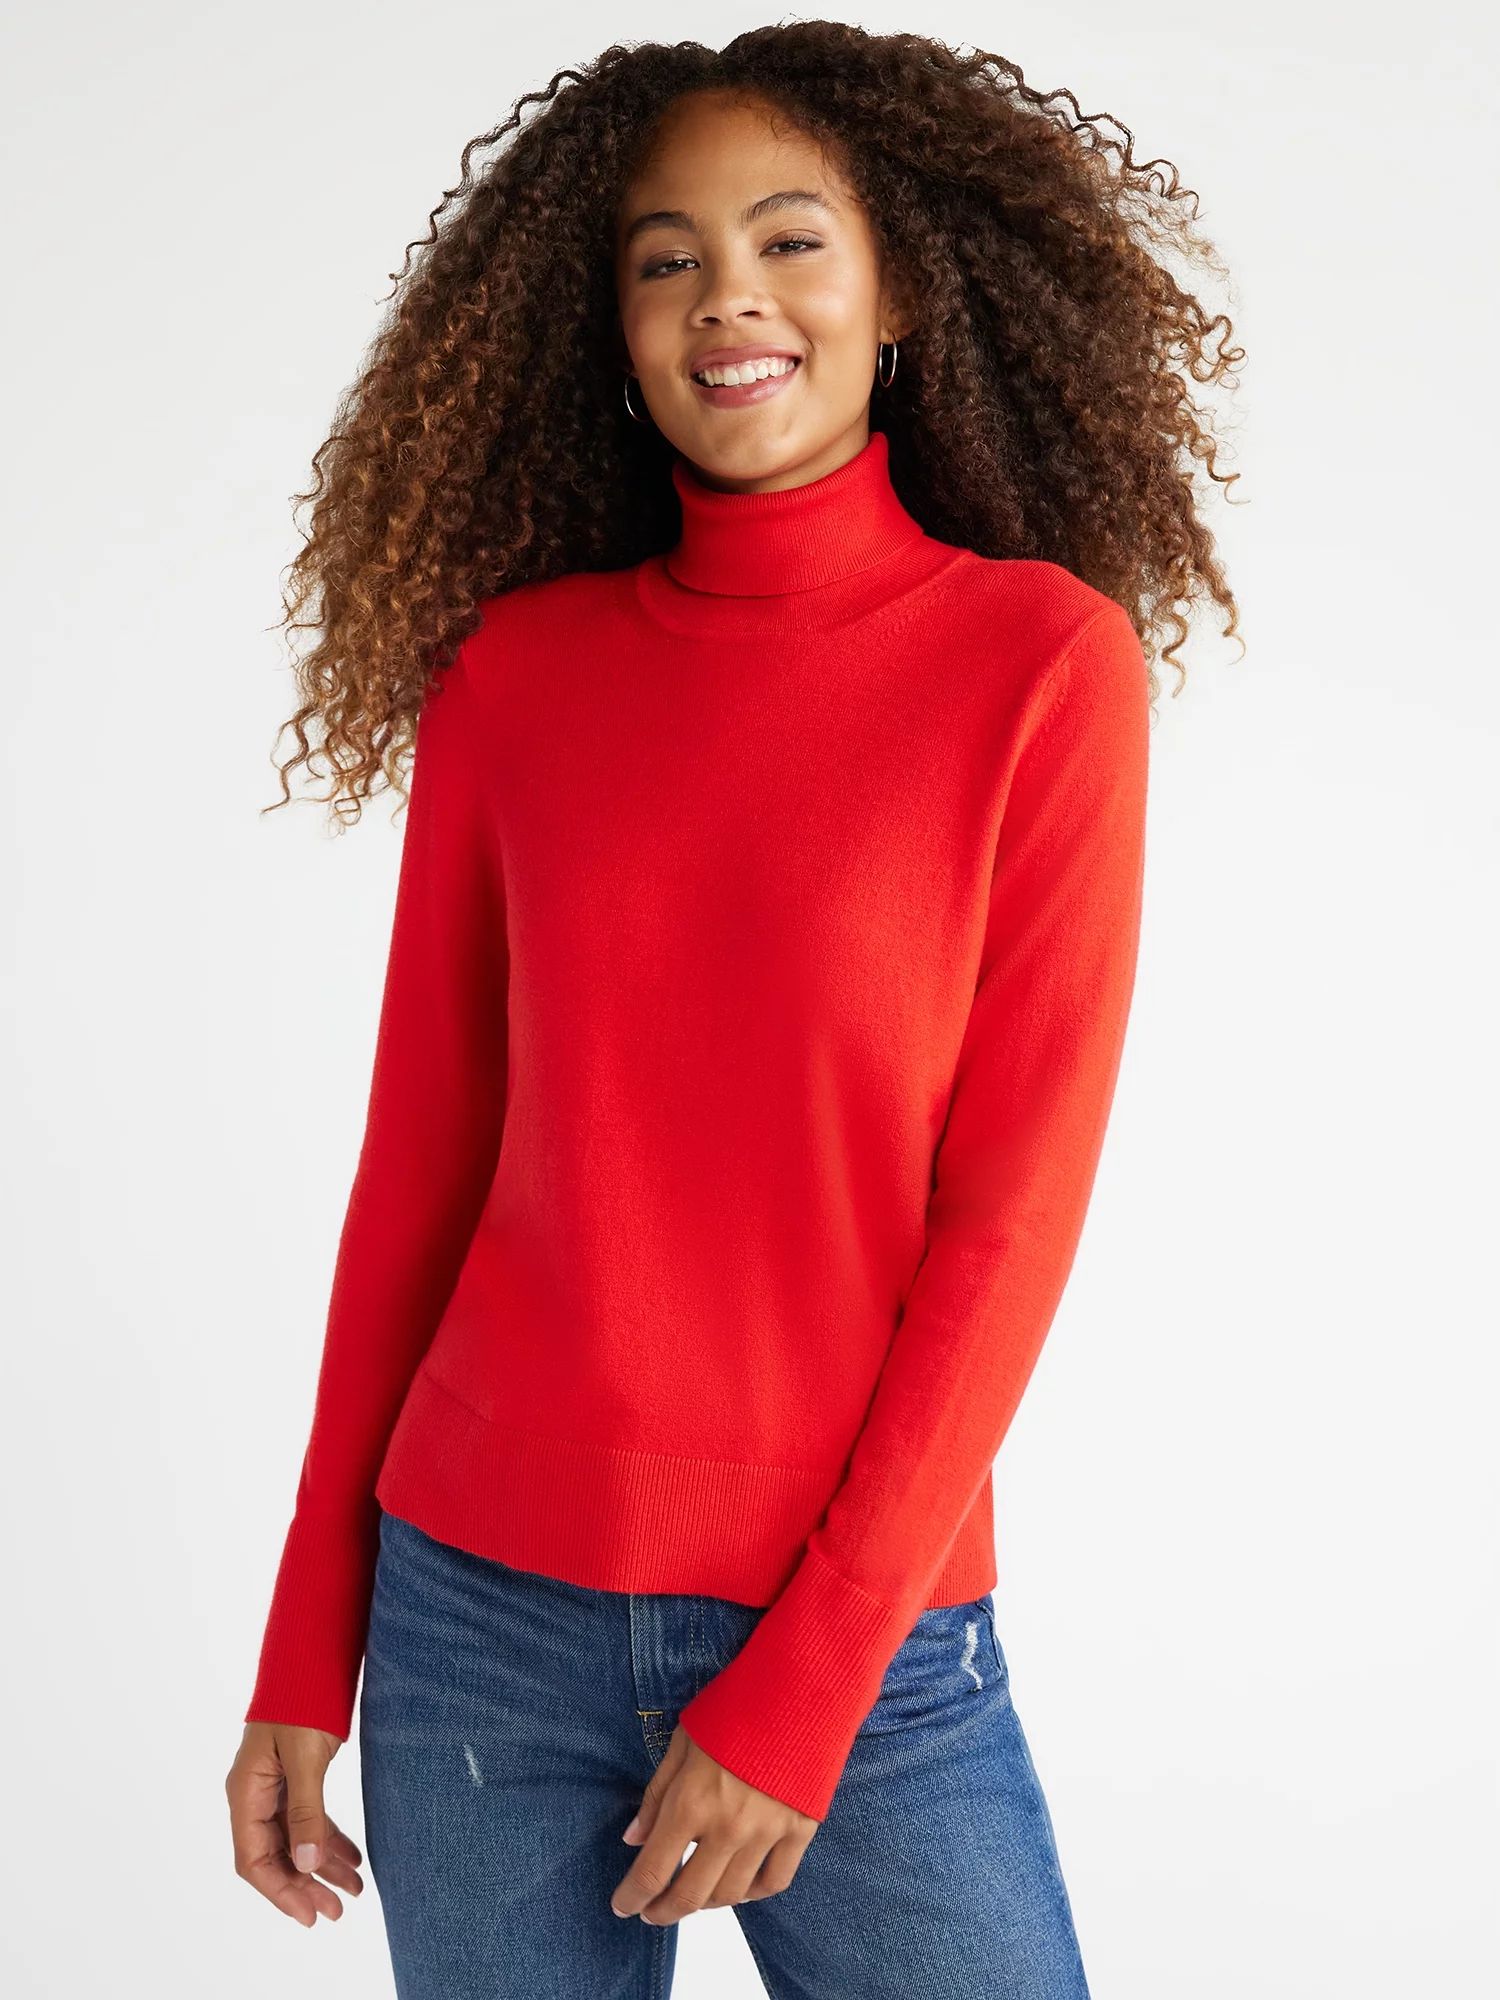 Free Assembly Women’s Turtleneck Sweater, Midweight, Sizes XS-XXXL | Walmart (US)